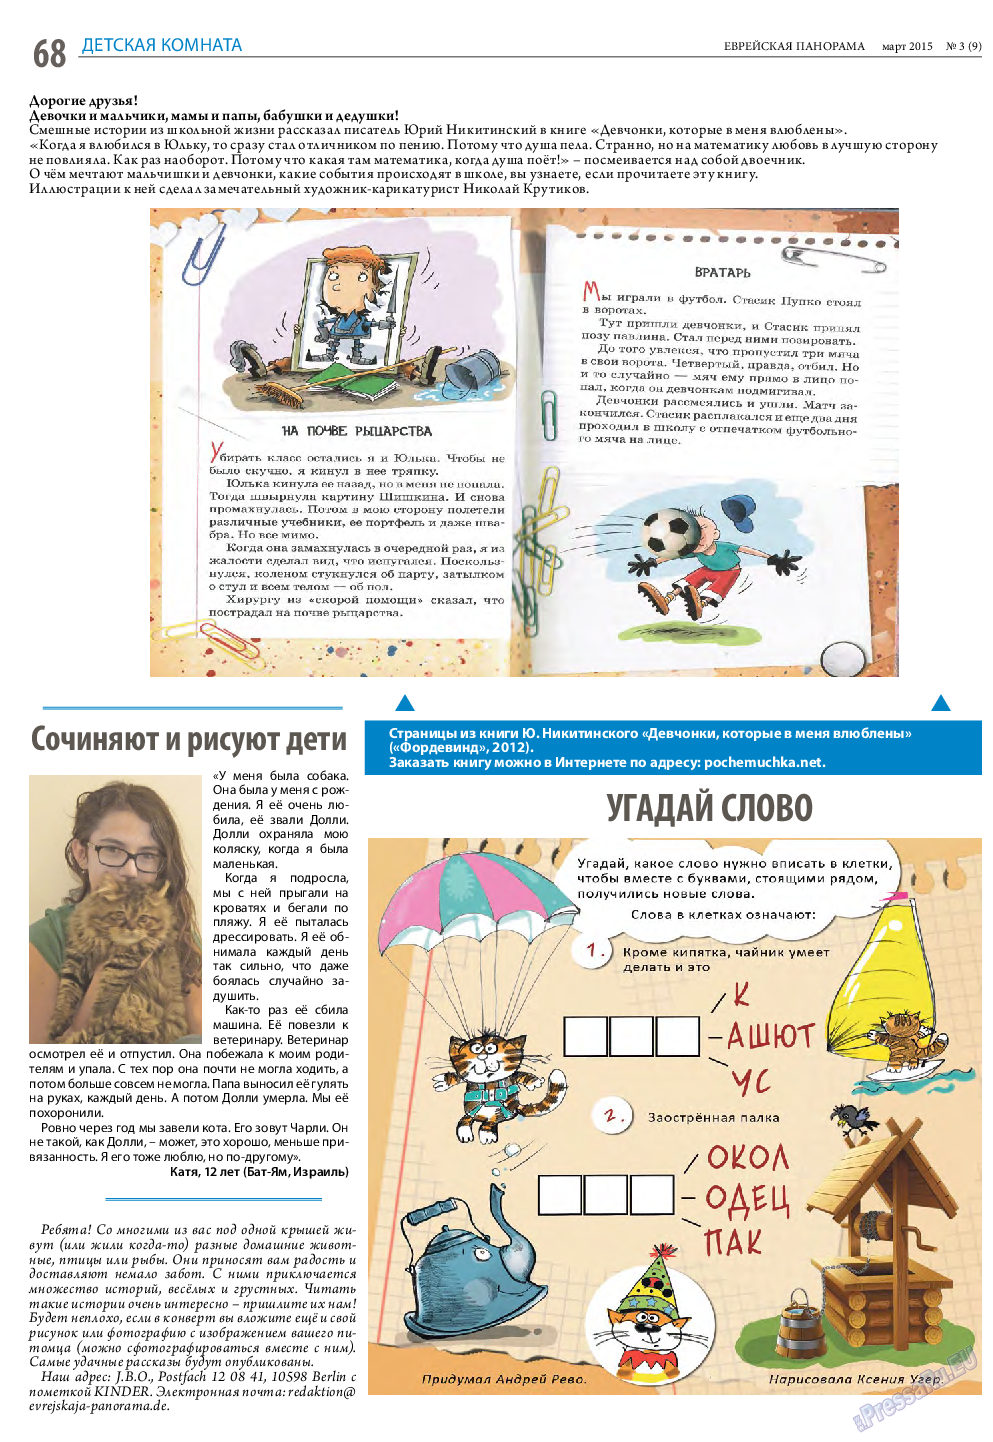 Еврейская панорама, газета. 2015 №3 стр.68